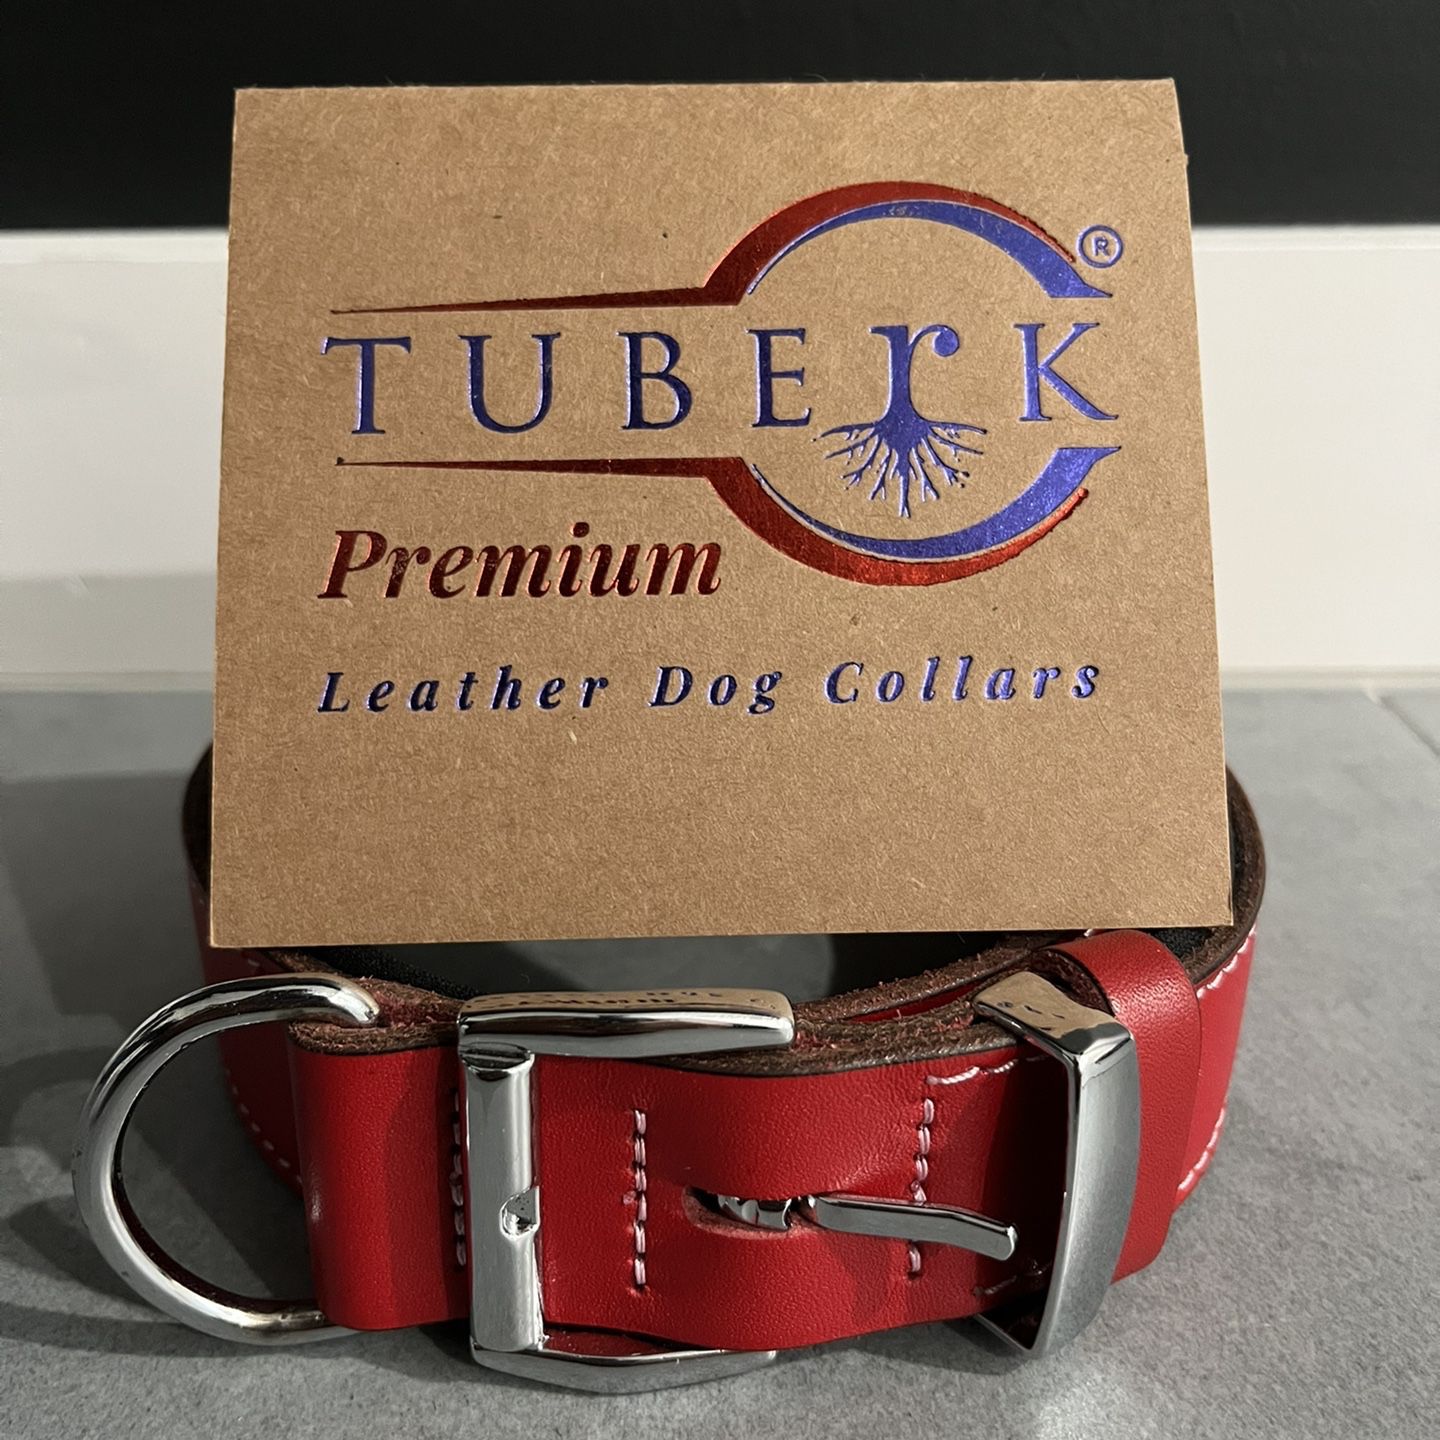 NEW Tuberk Dog Collar